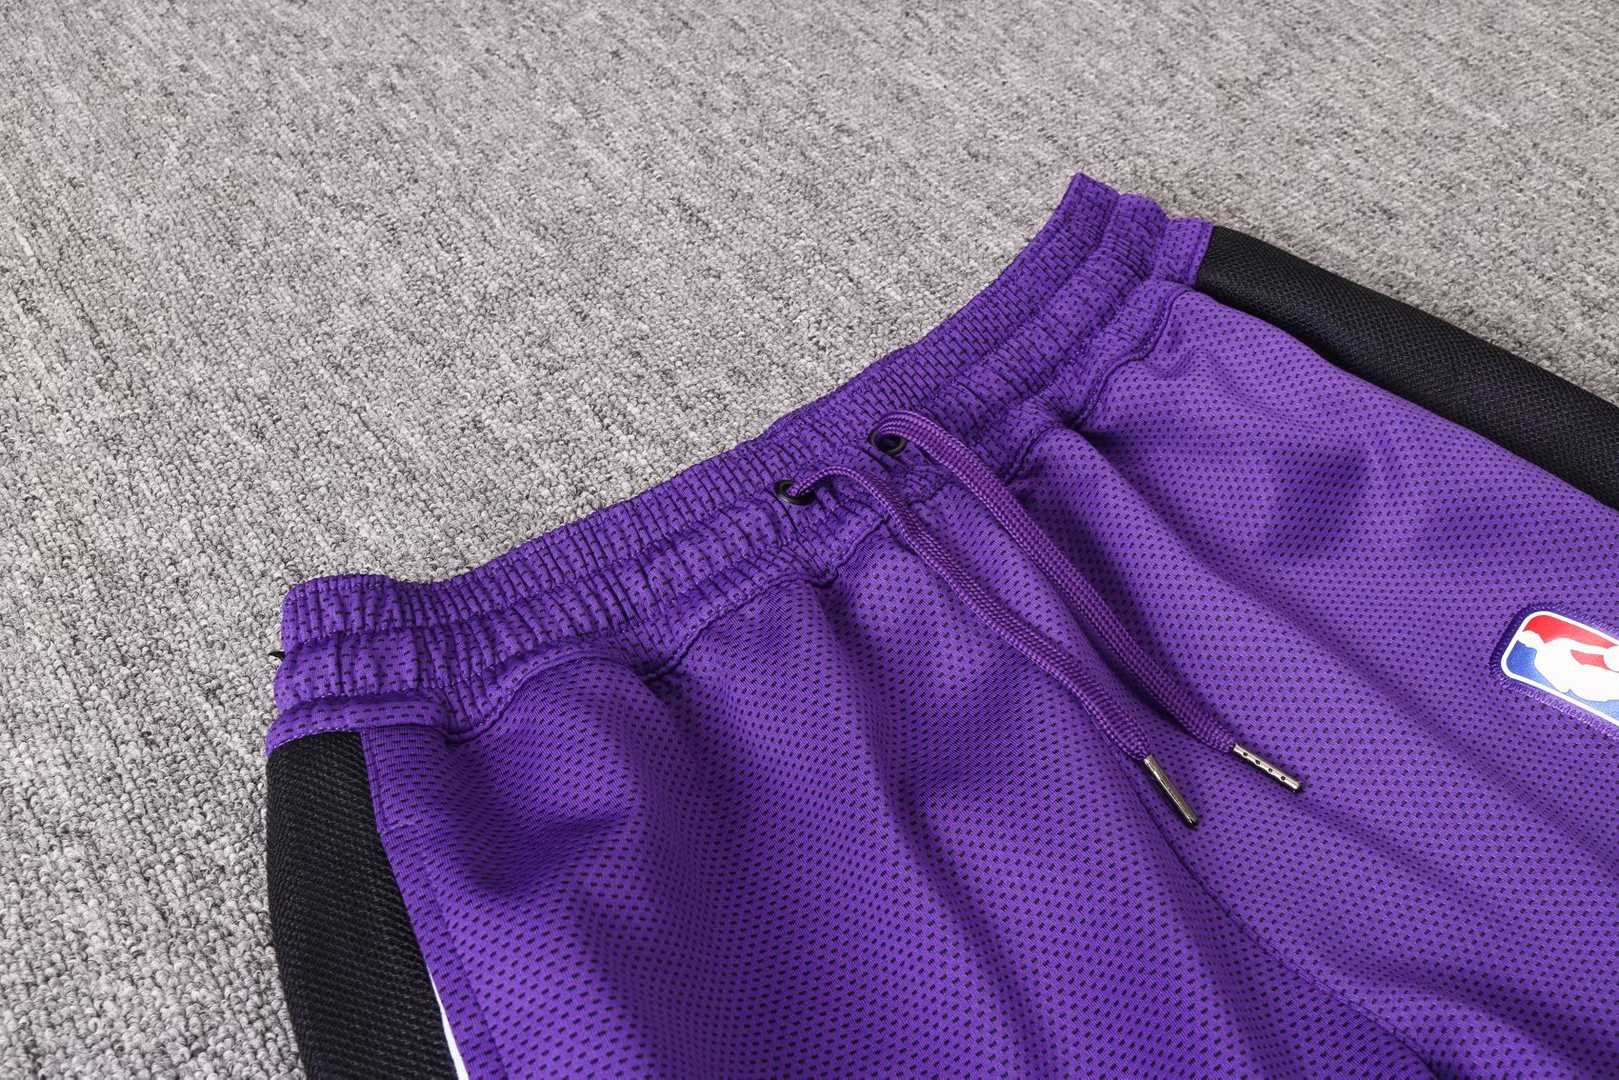 2020/21 LA Lakers Hoodie Purple Mens Soccer Training Suit(Jacket + Pants)